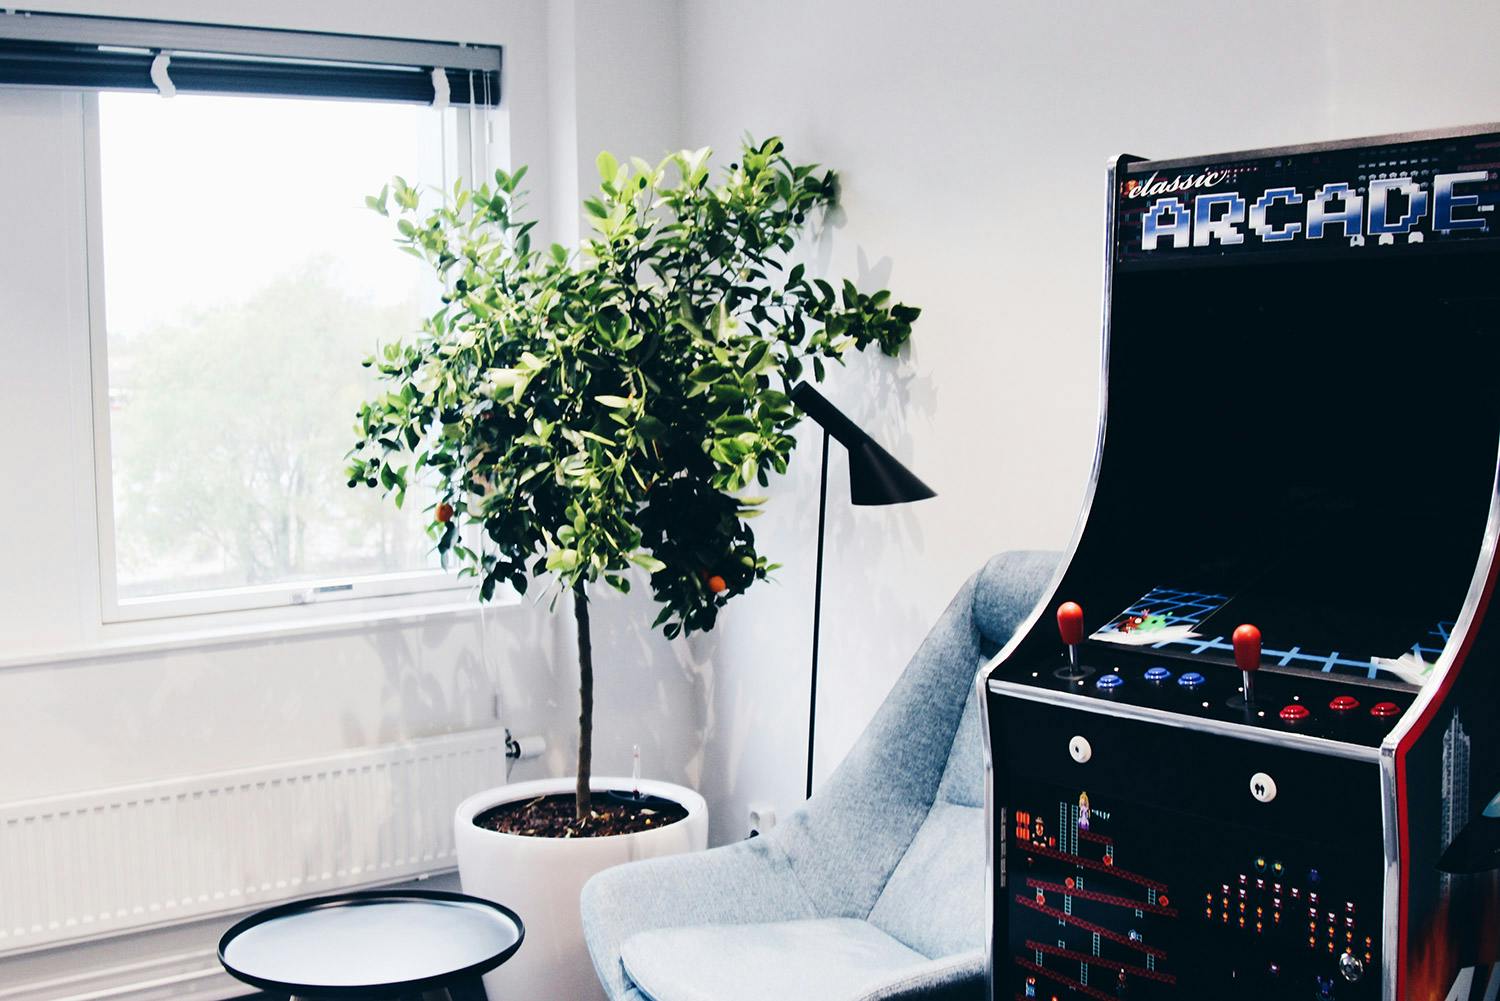 Arcade spel på Consids kontor i Ljungby